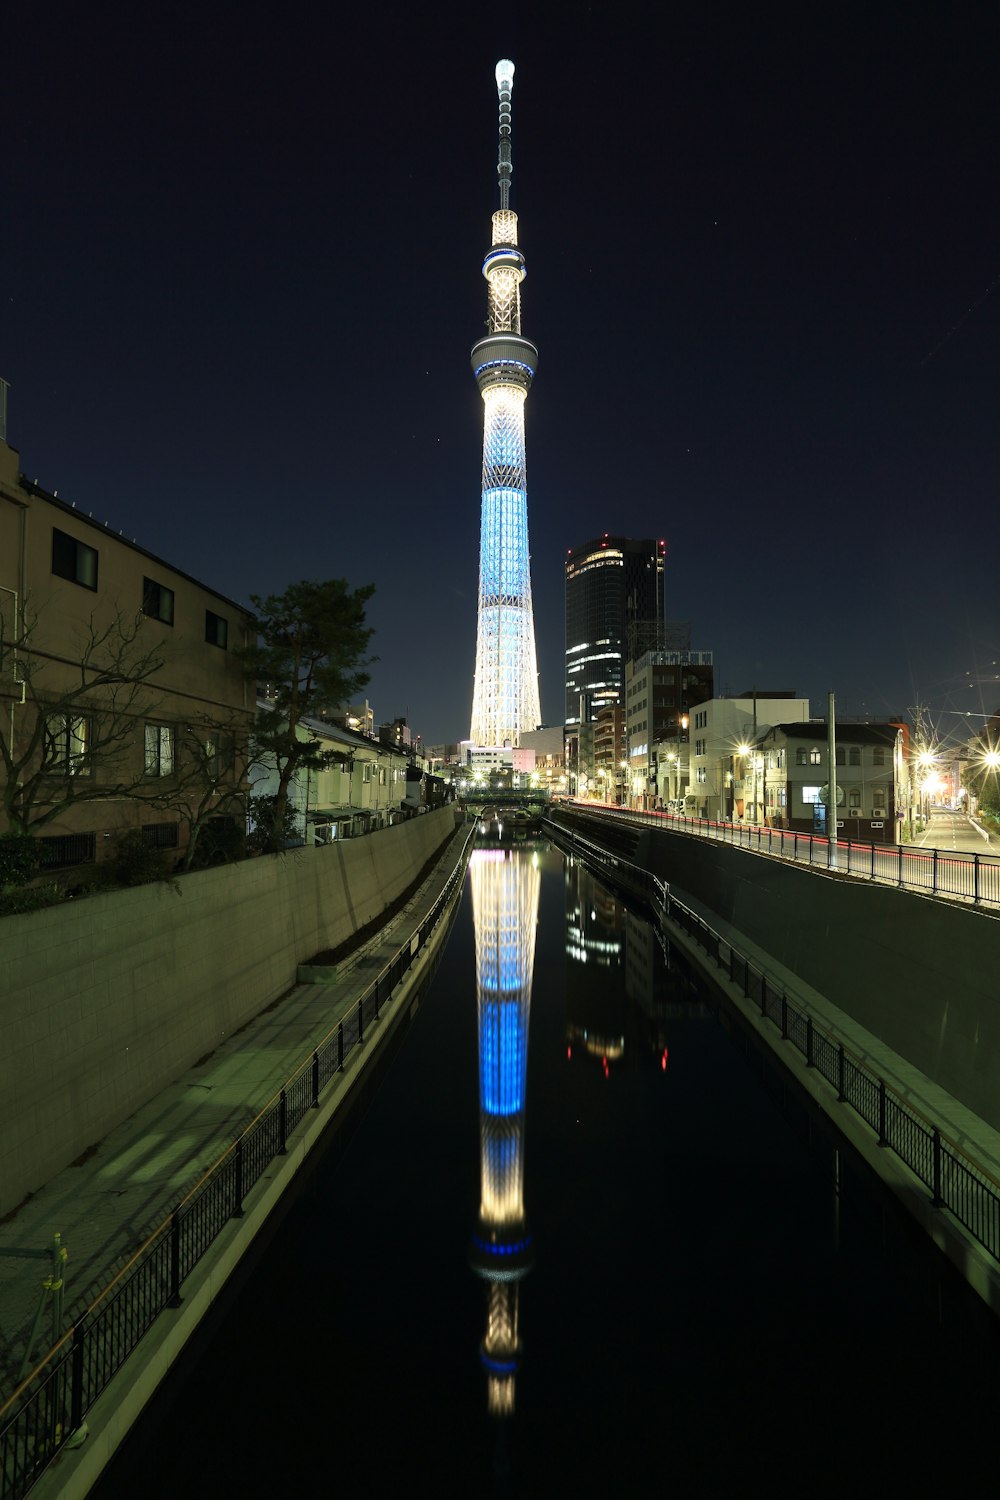 Torre iluminada azul e branca durante a noite